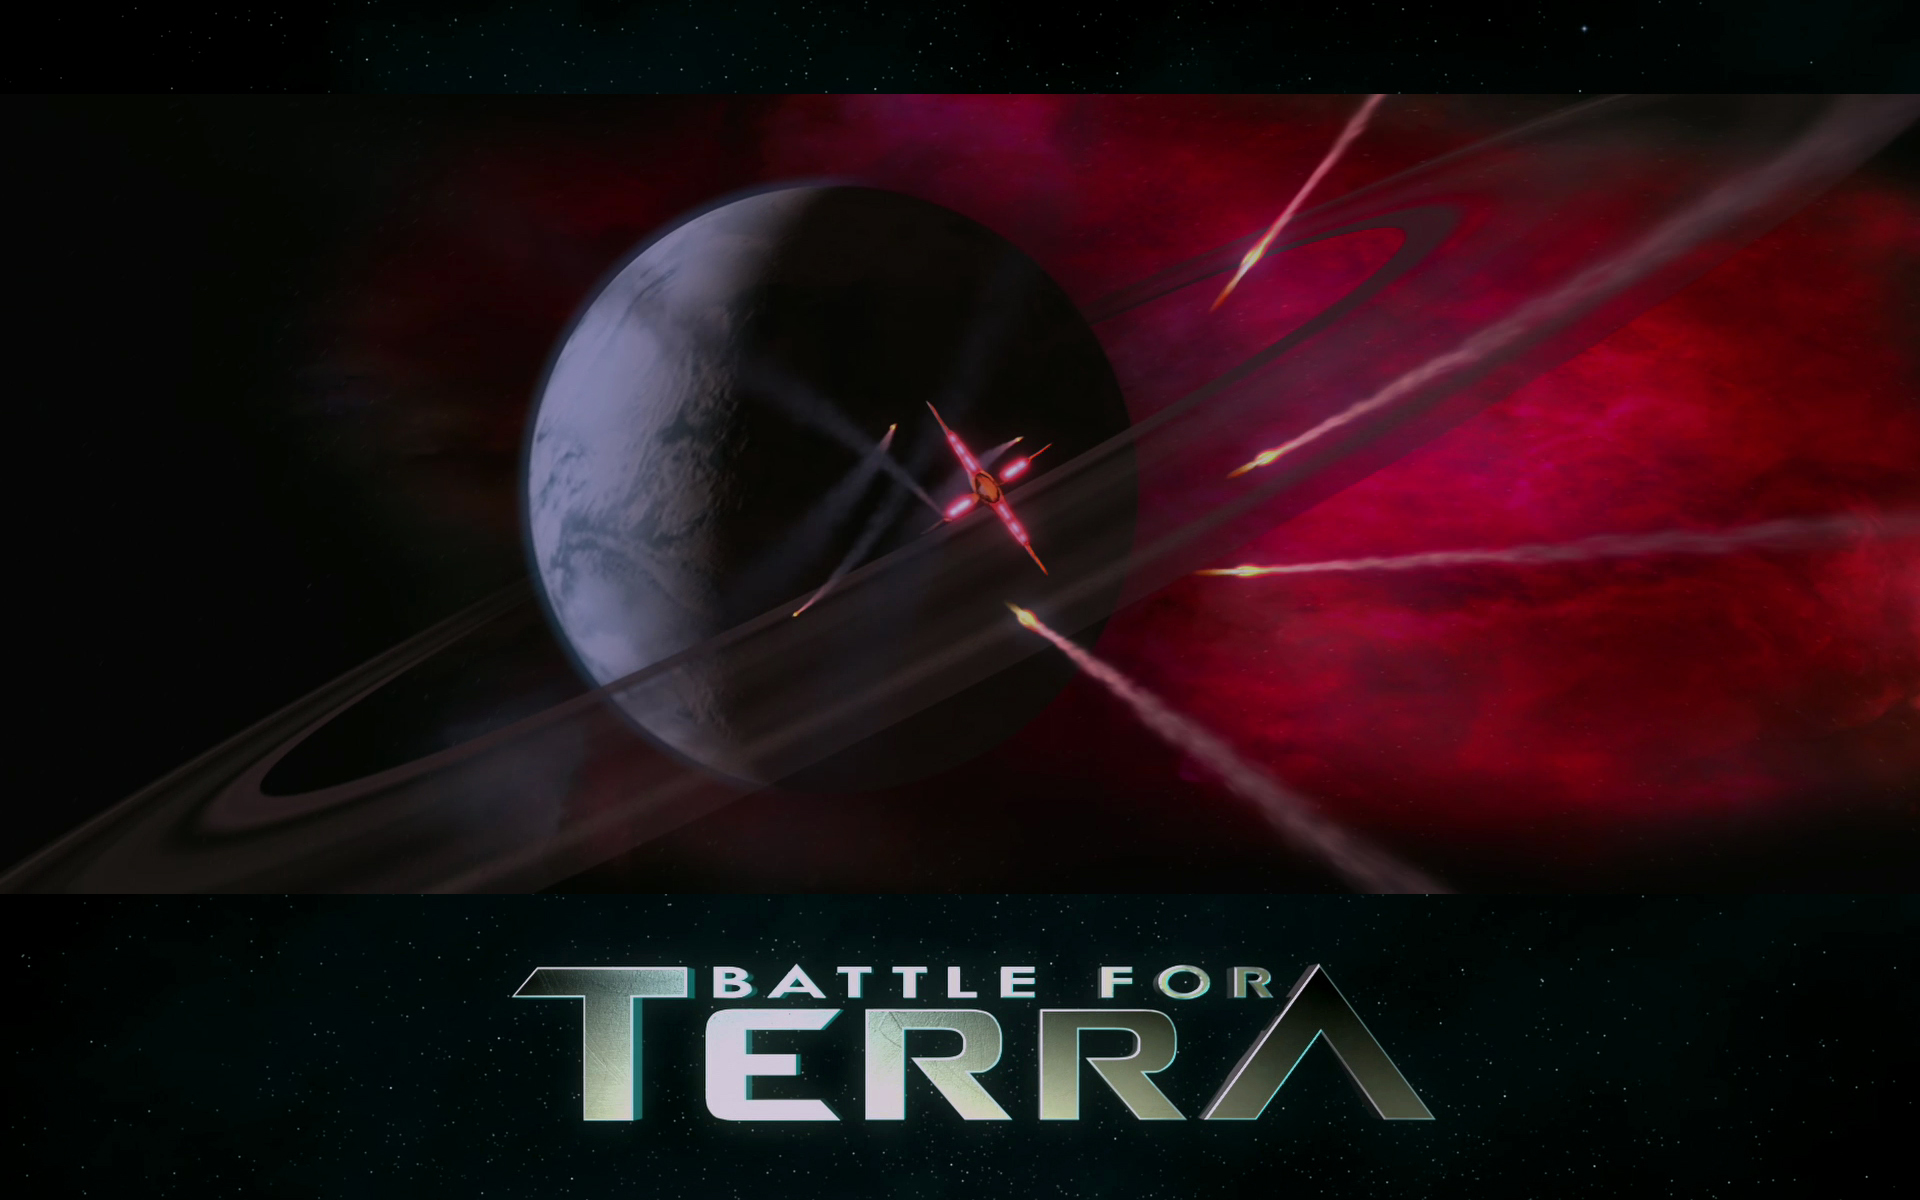 Battle For Terra Backgrounds on Wallpapers Vista